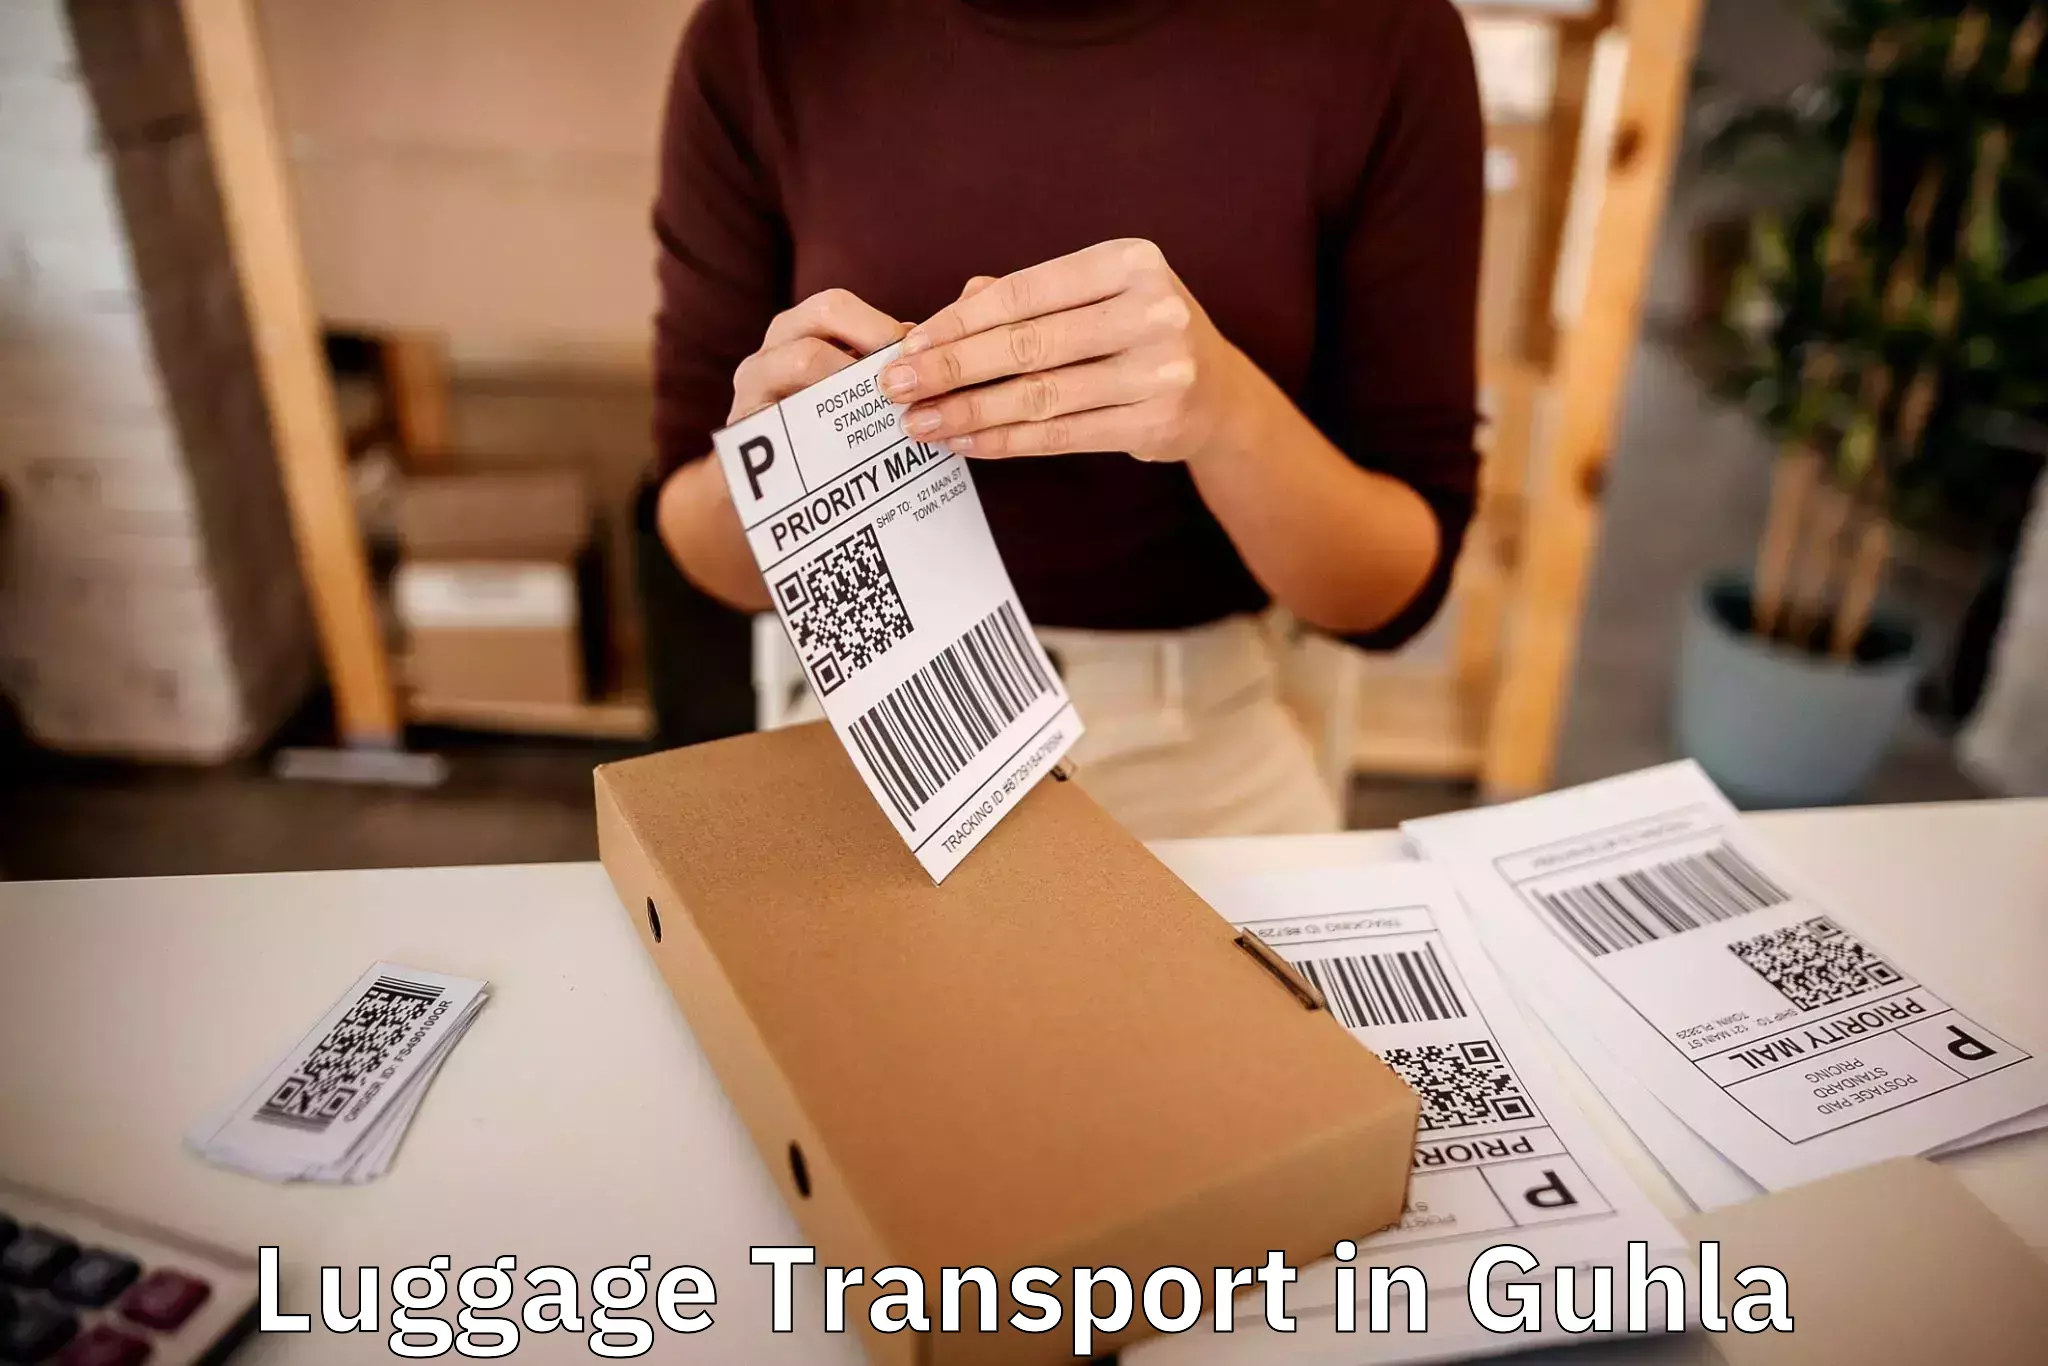 Domestic luggage transport in Guhla